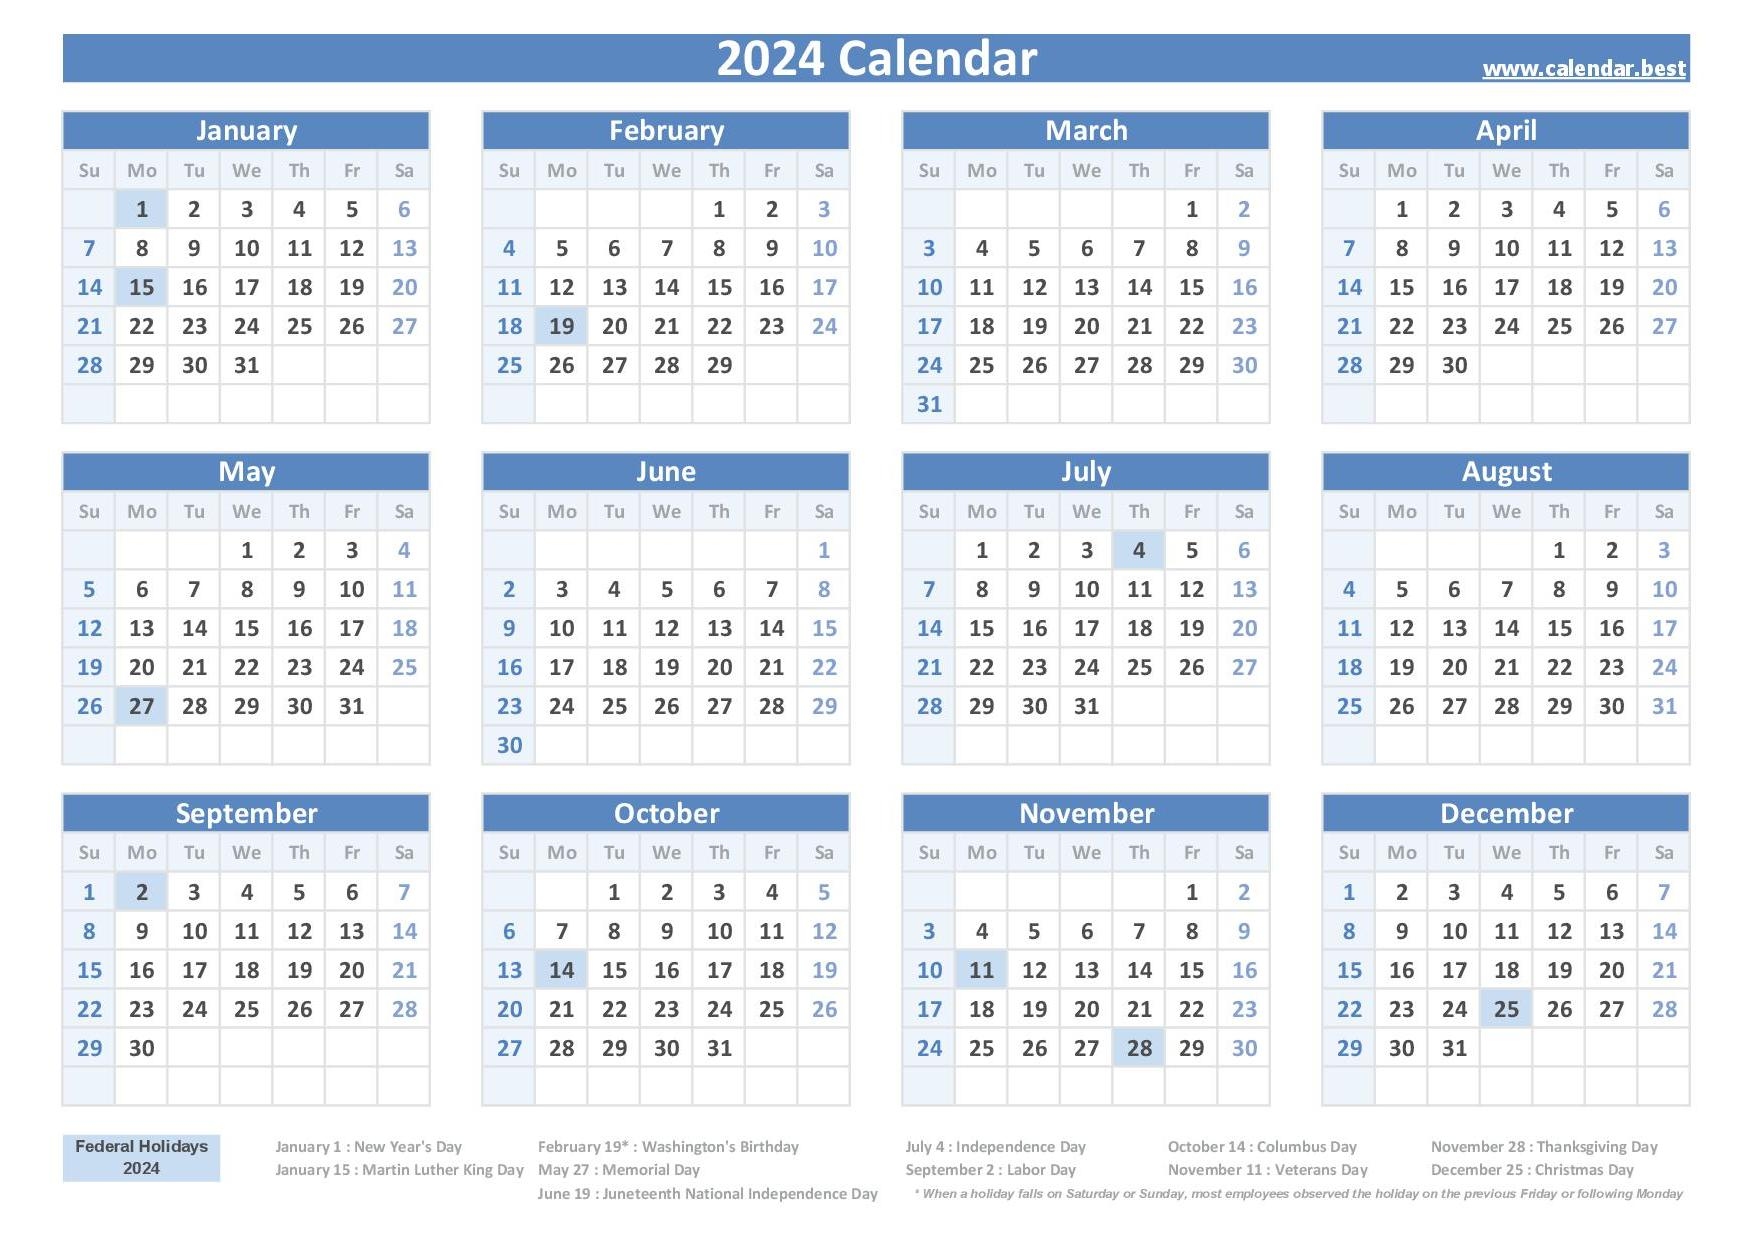 2024 Us Federal Holiday Calendar Printable Bill Marjie - Free Printable 2024 Calendar With Holidays June